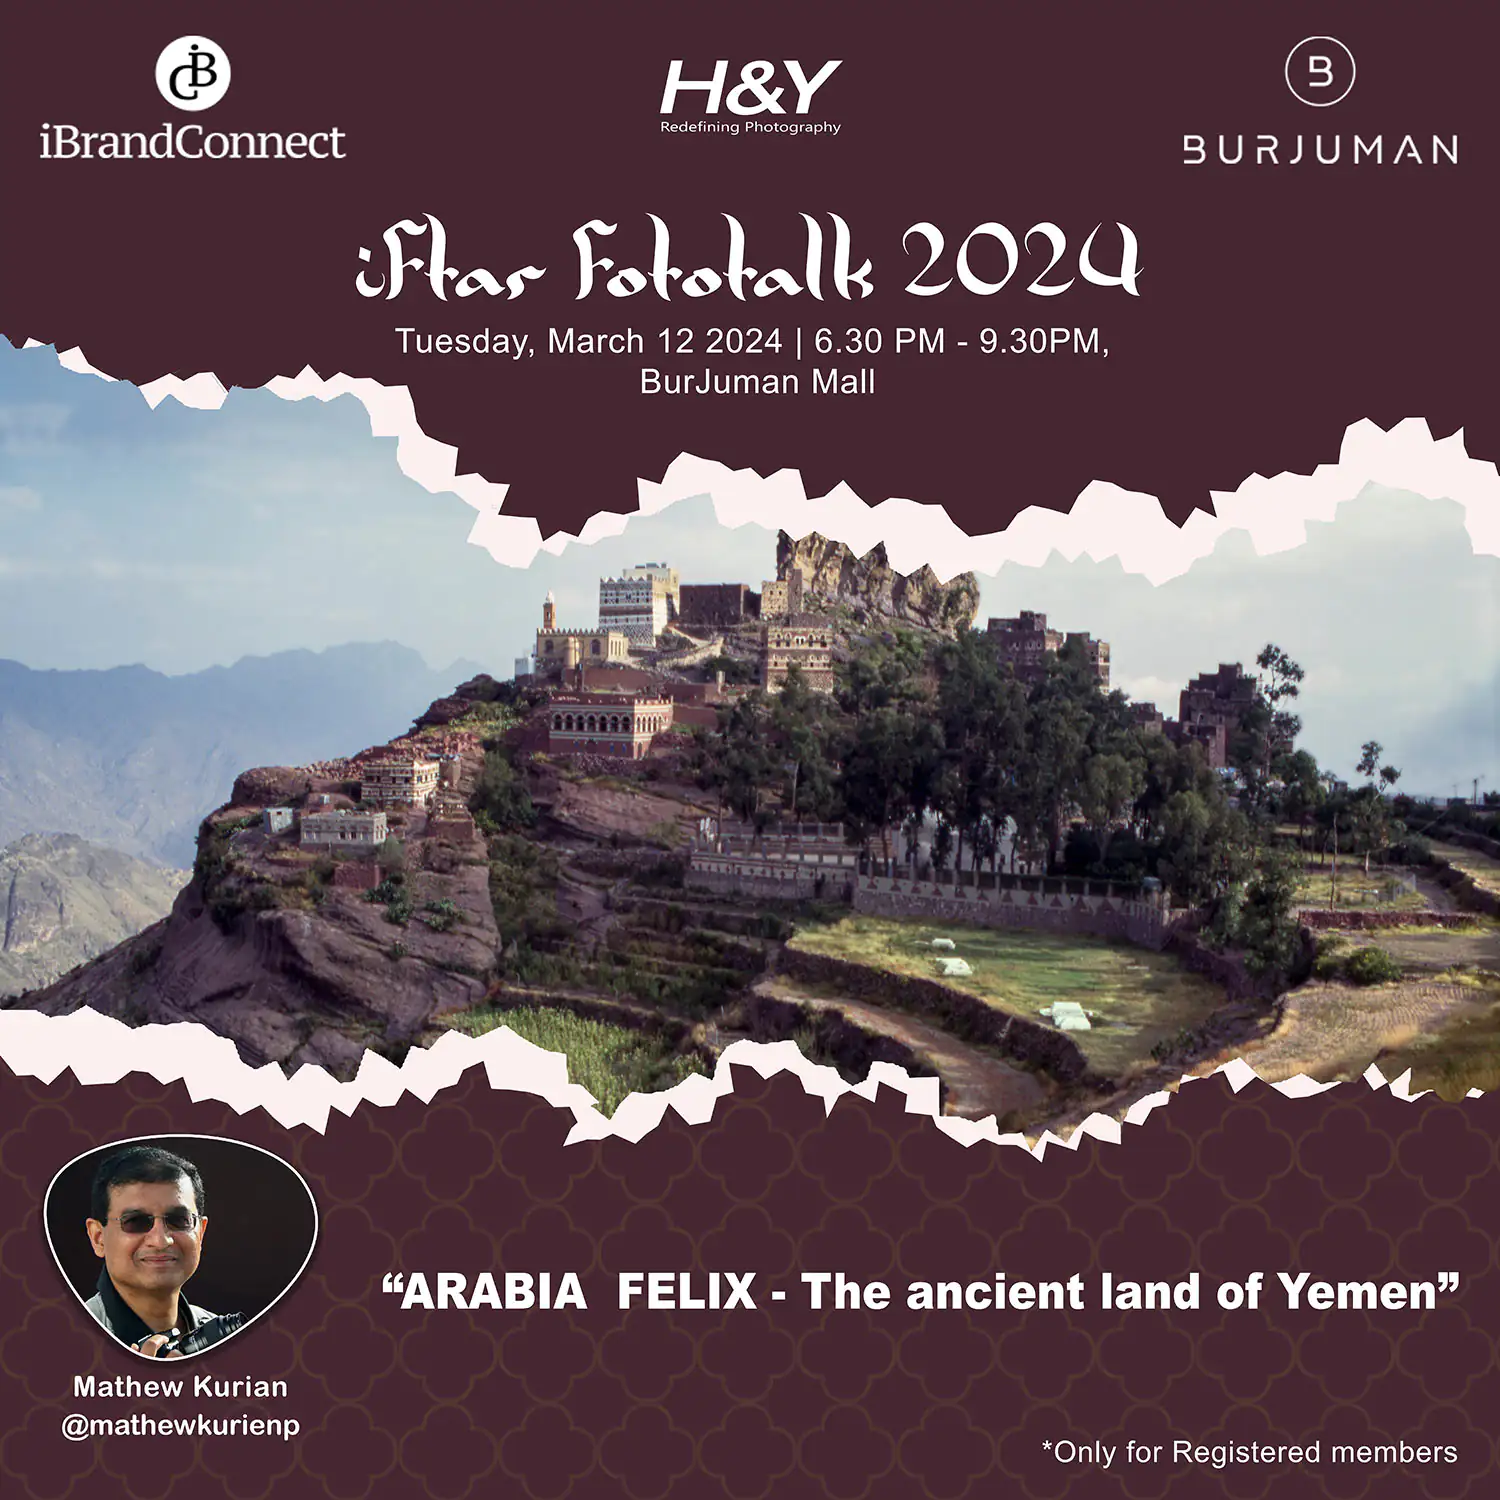 ARABIA FELIX - The ancient land of Yemen - Iftar Fototalk 2024